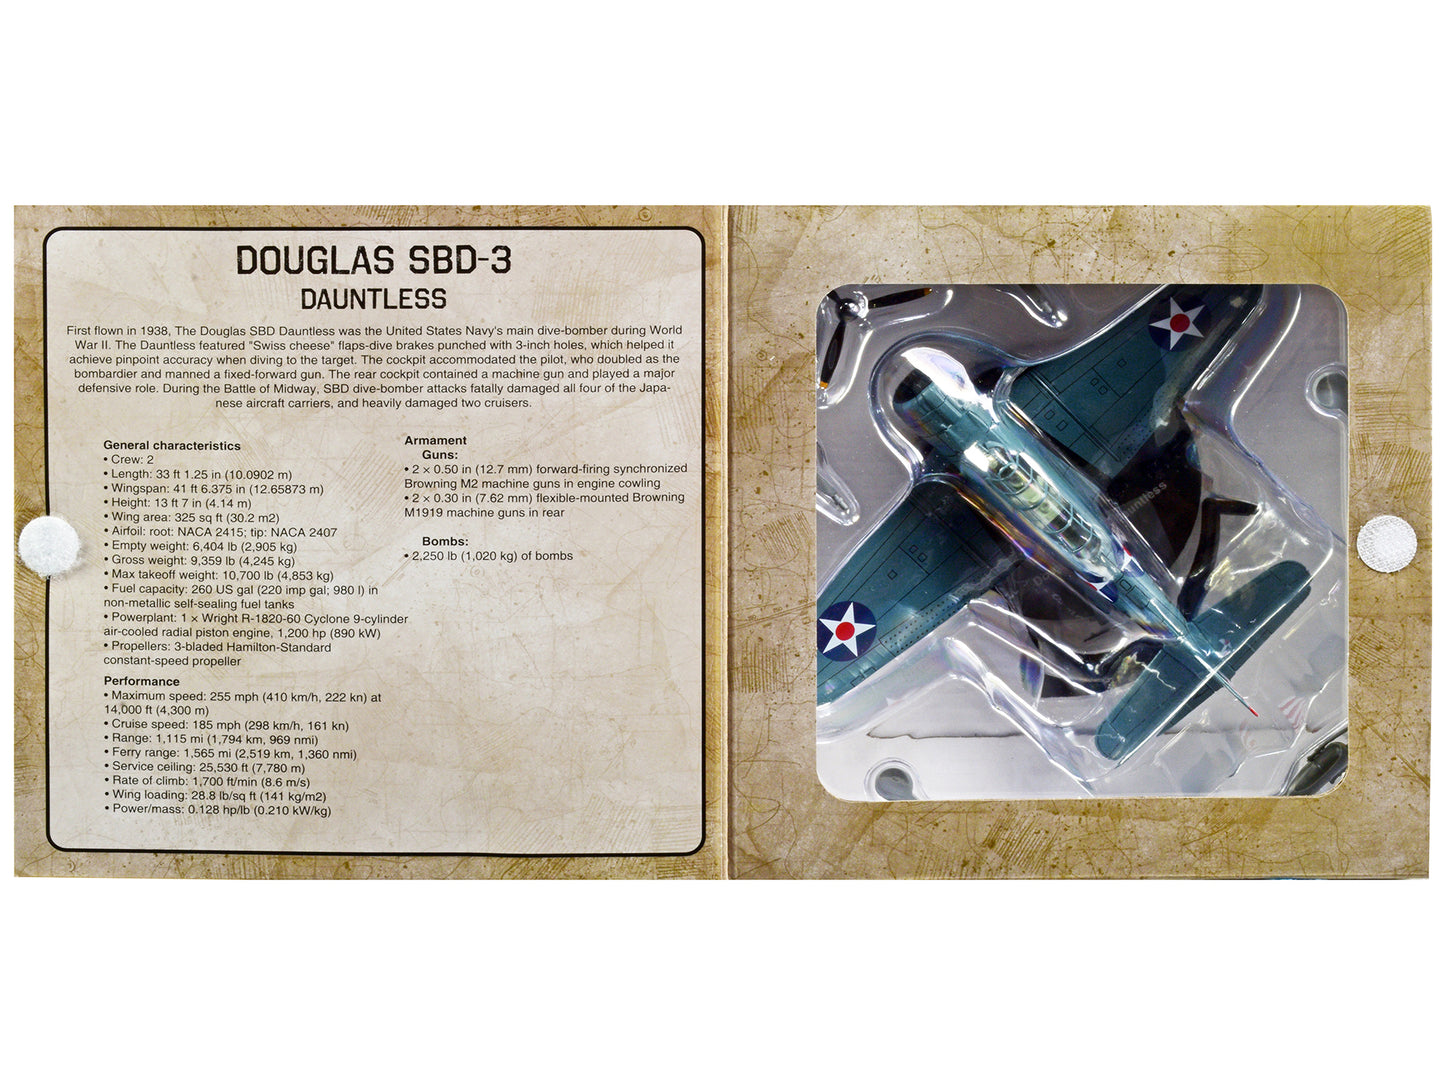 douglass sbd-3 dauntless bomber plane united states navy 1938 1/72 diecast model